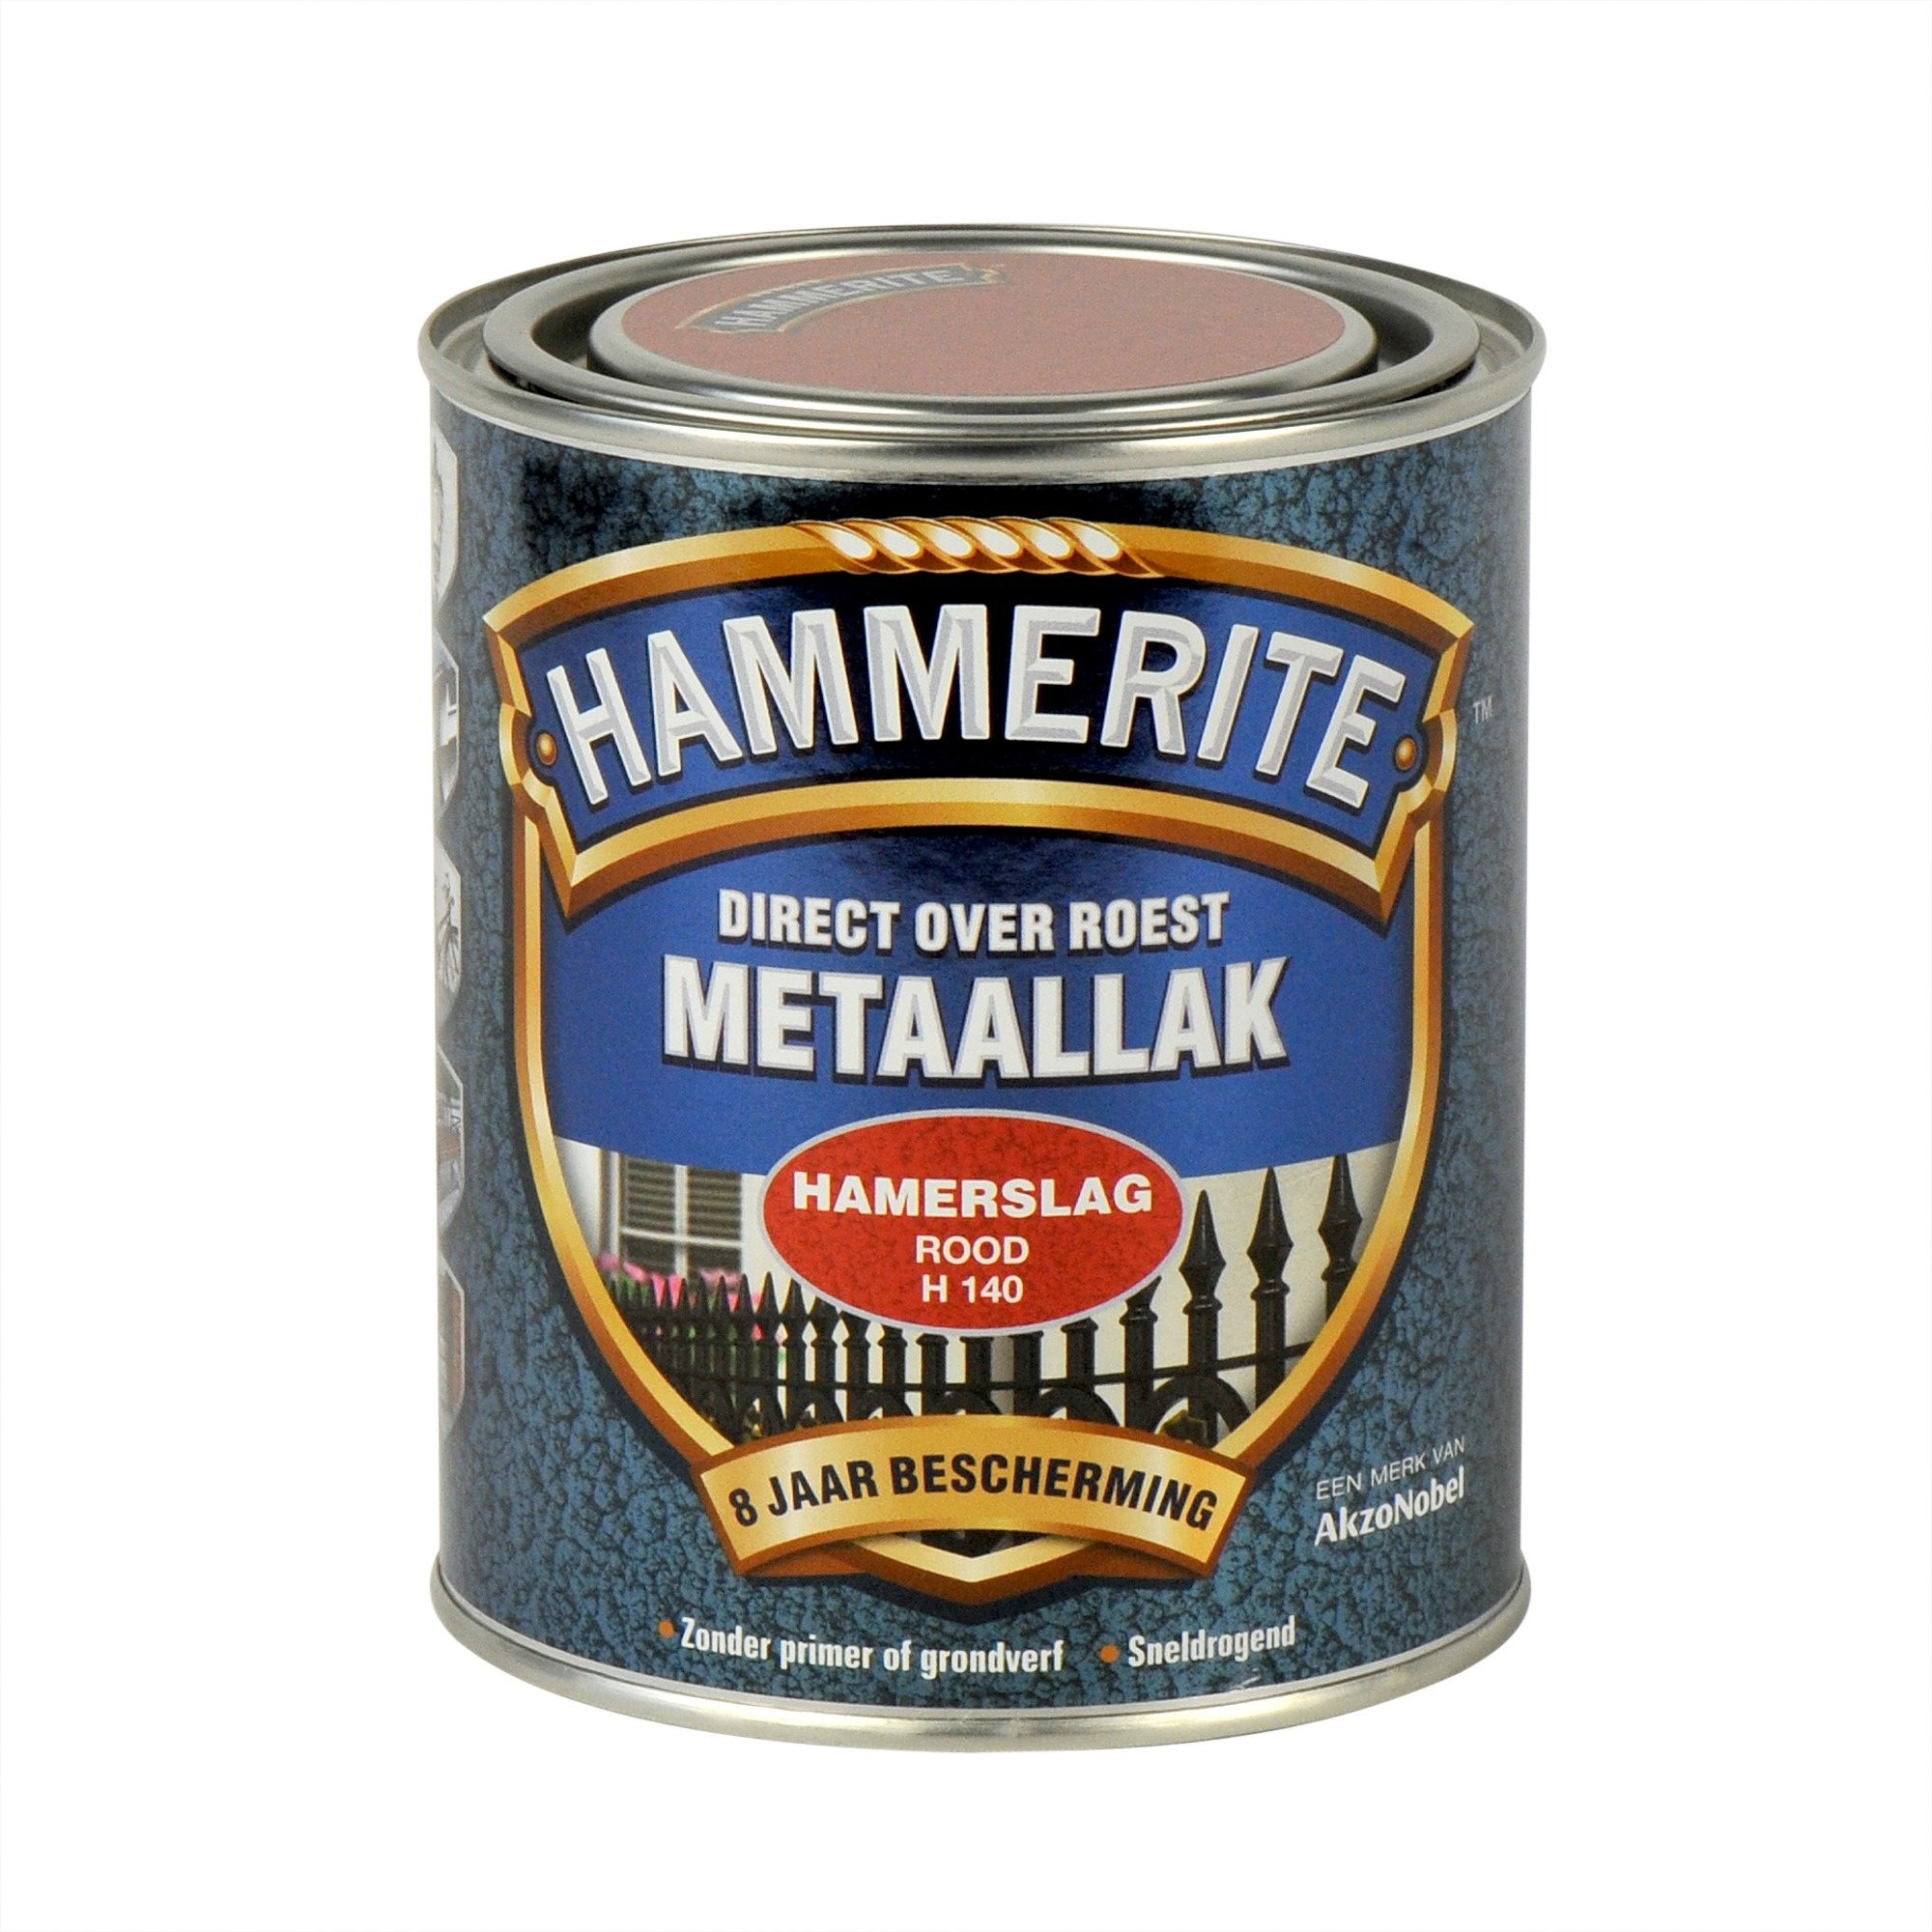 Hammerite Metaallak Direct over Roest Hamerslag - H140 Rood